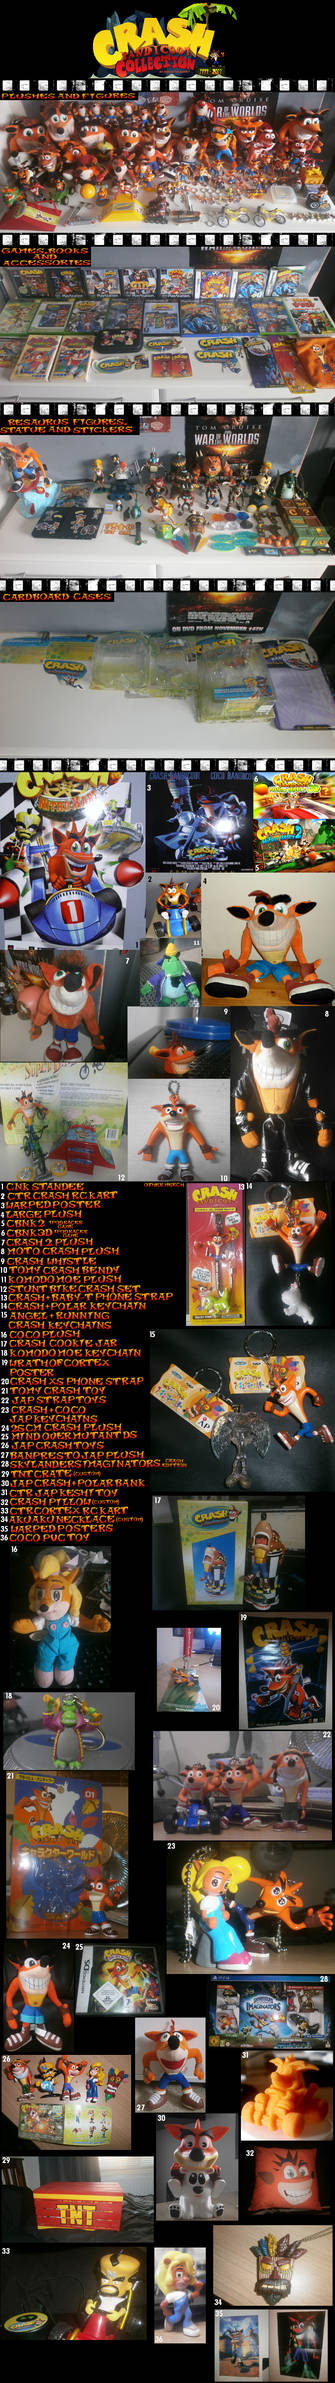 Full Crash Bandicoot Collection (2013 - 2017)